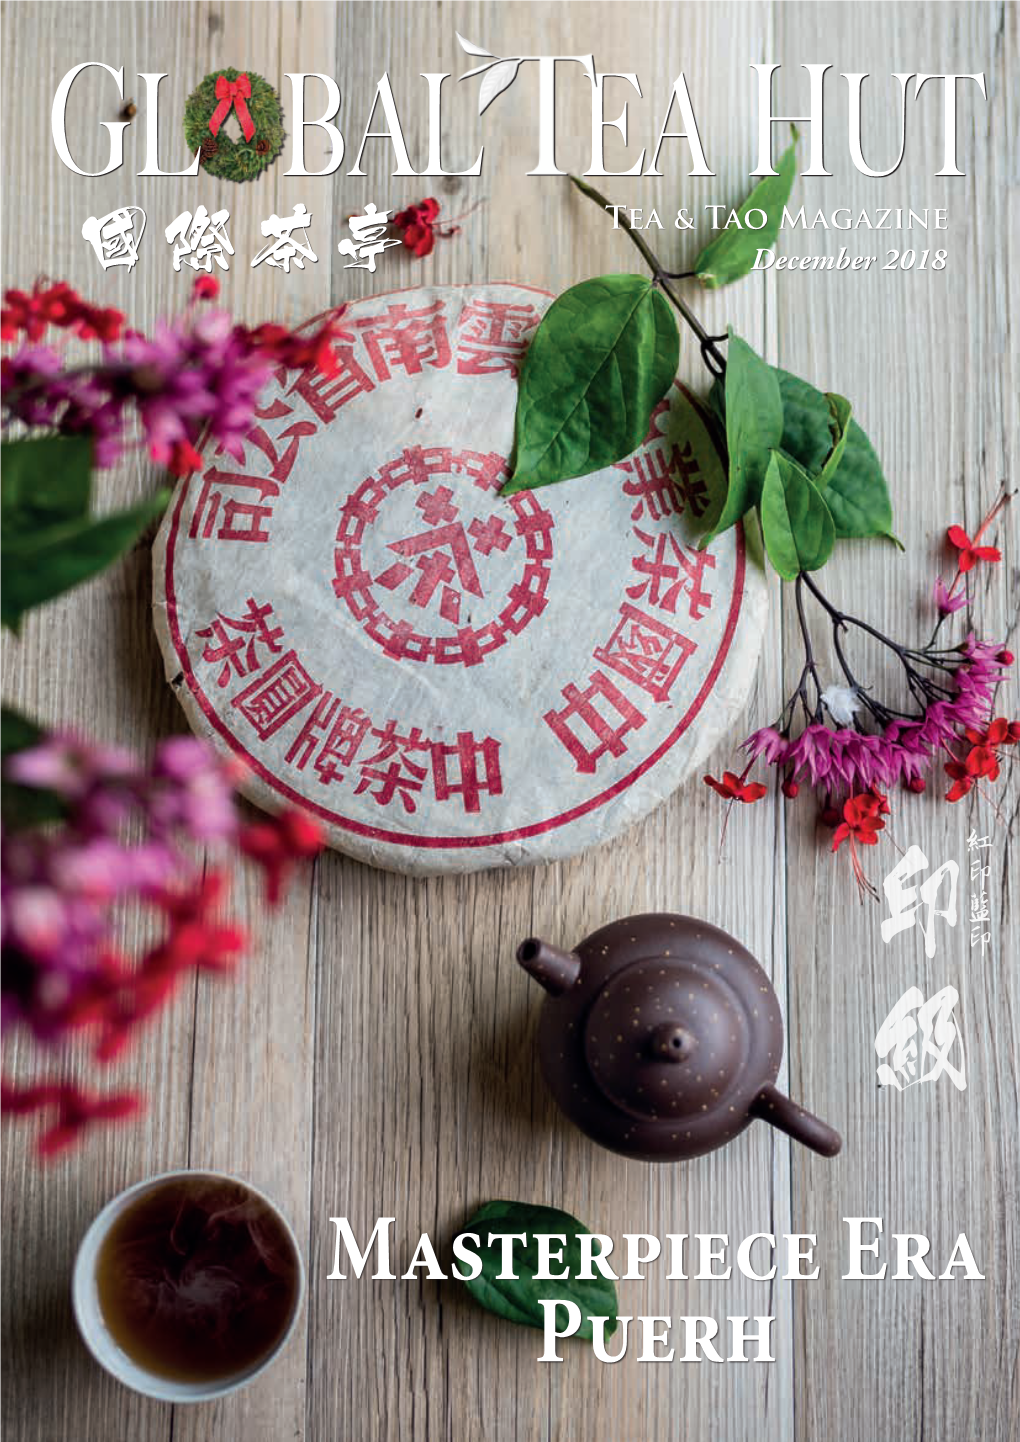 Masterpiece Era Puerh GLOBAL EA HUT Contentsissue 83 / December 2018 Tea & Tao Magazine Blue藍印 Mark